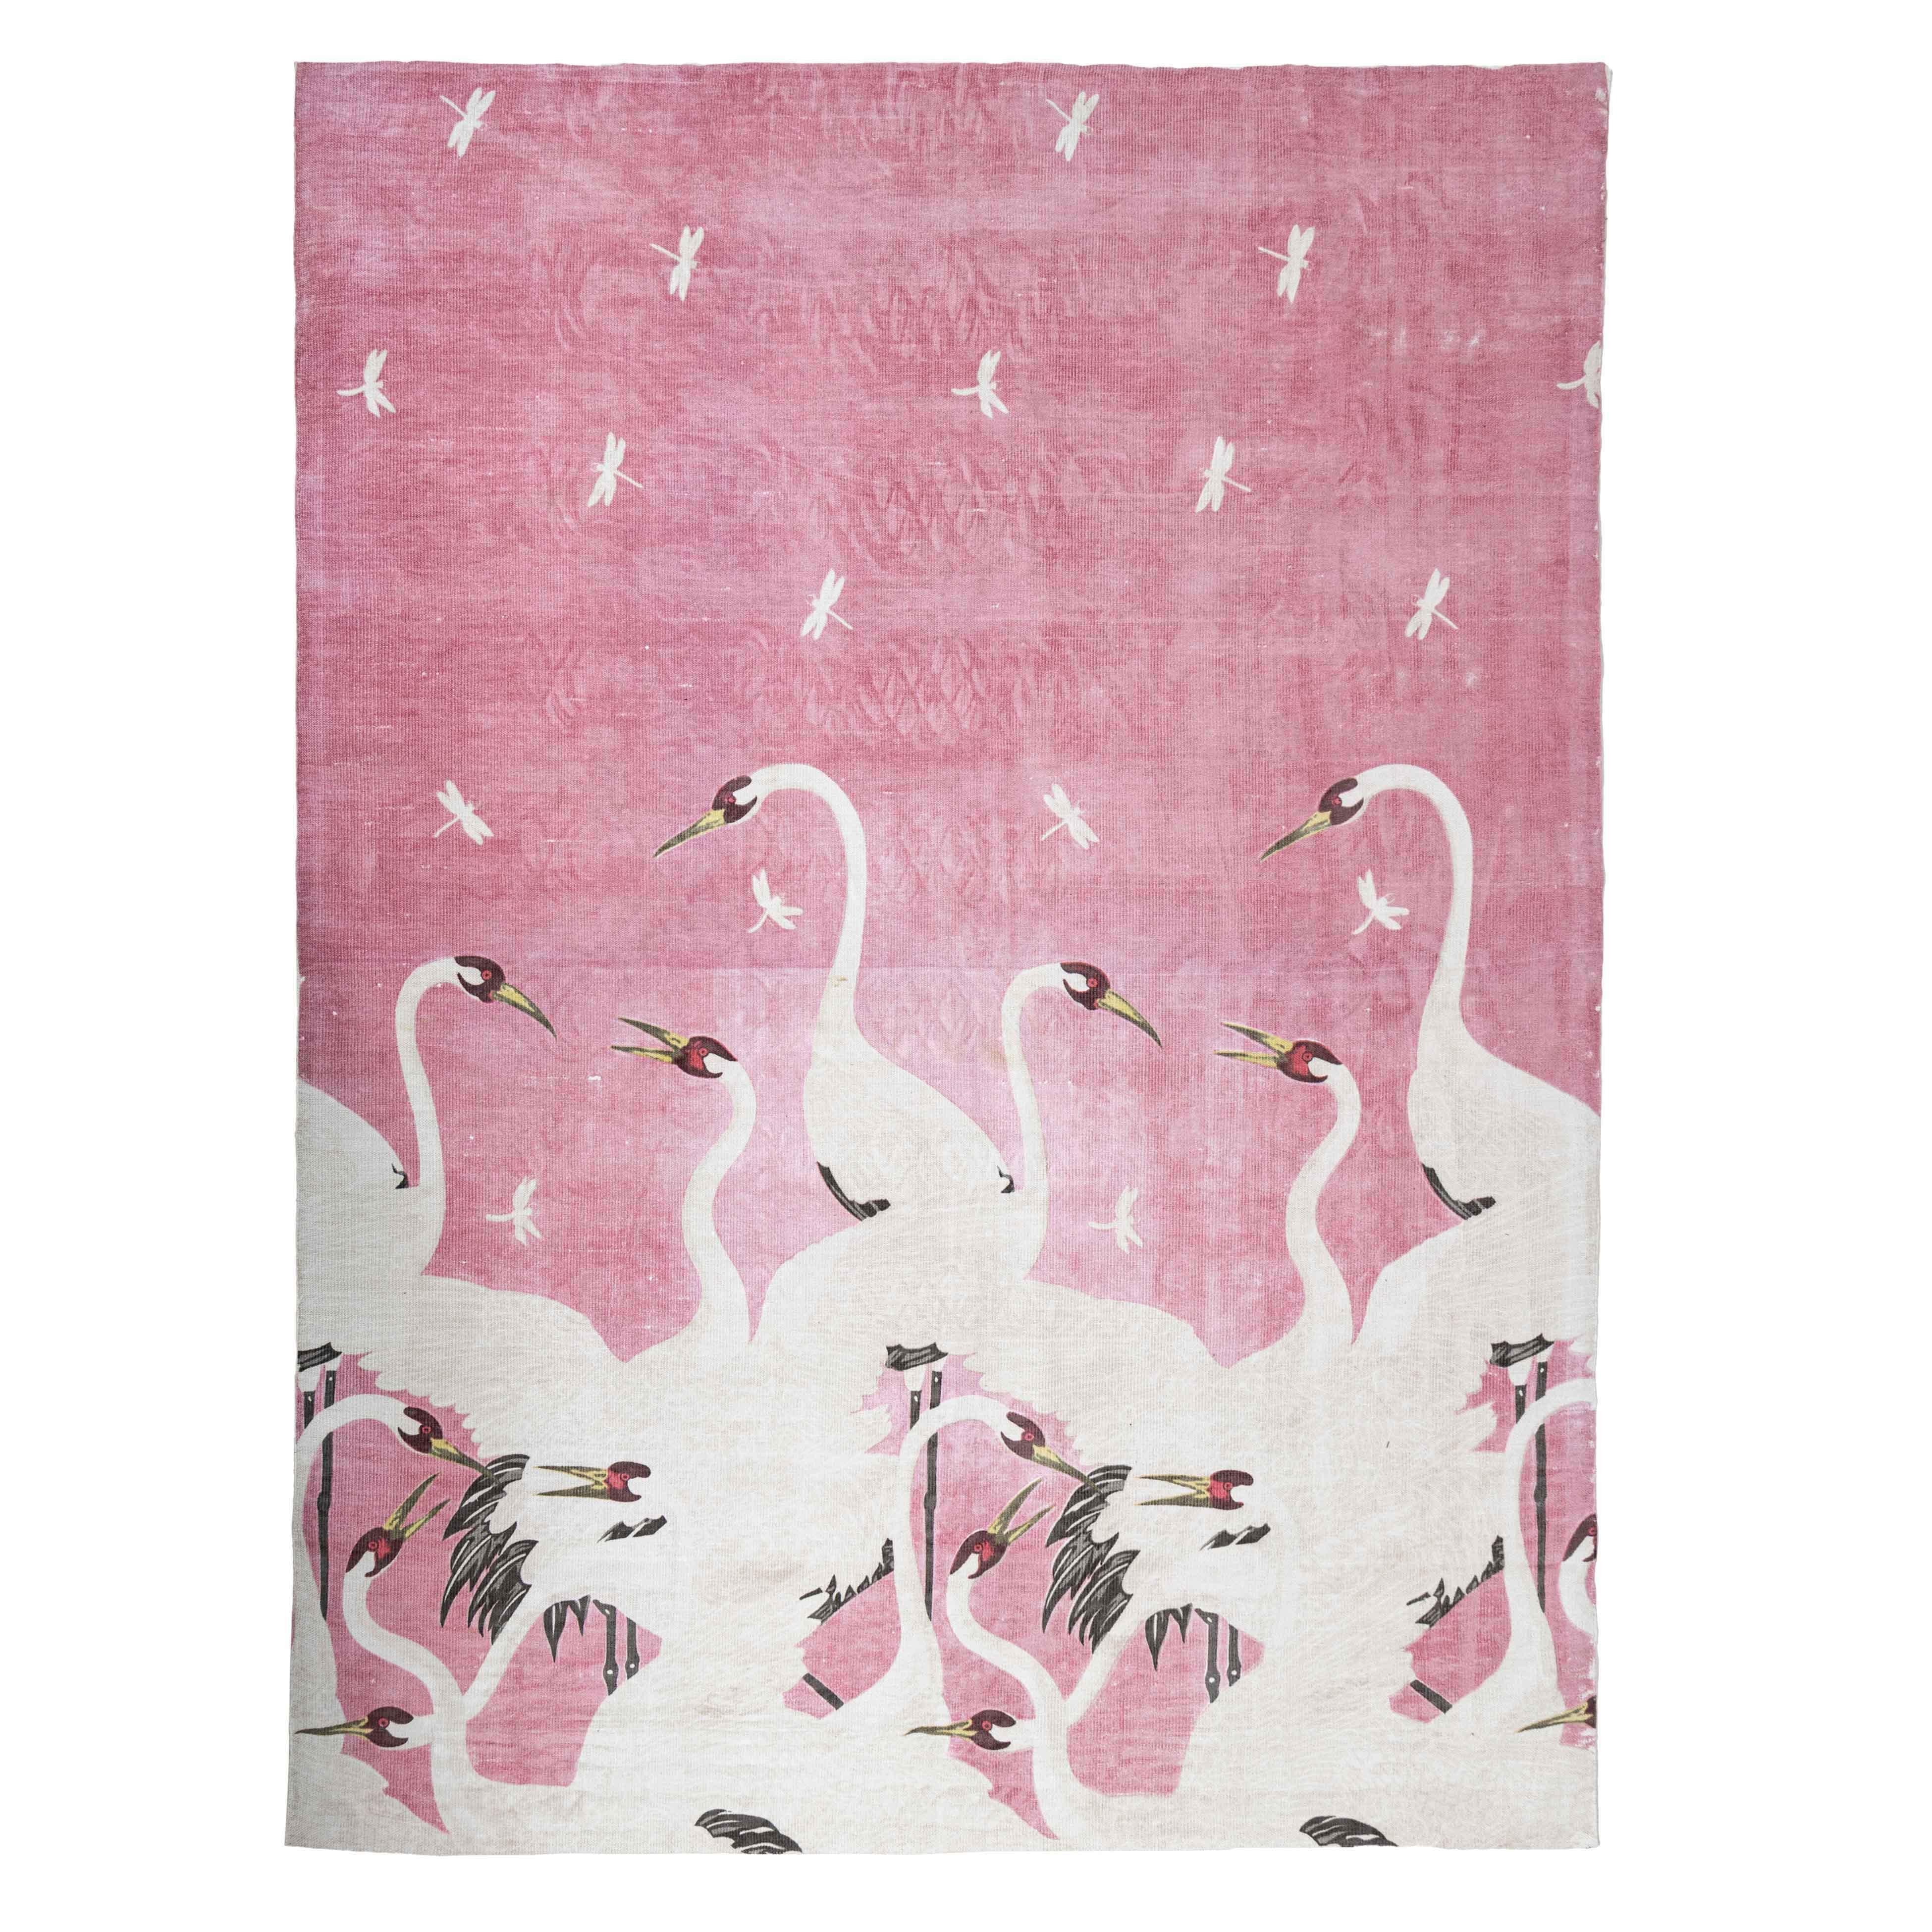 Tov Furniture Rugs - Flamingo Pink 8' x 10' Area Rug